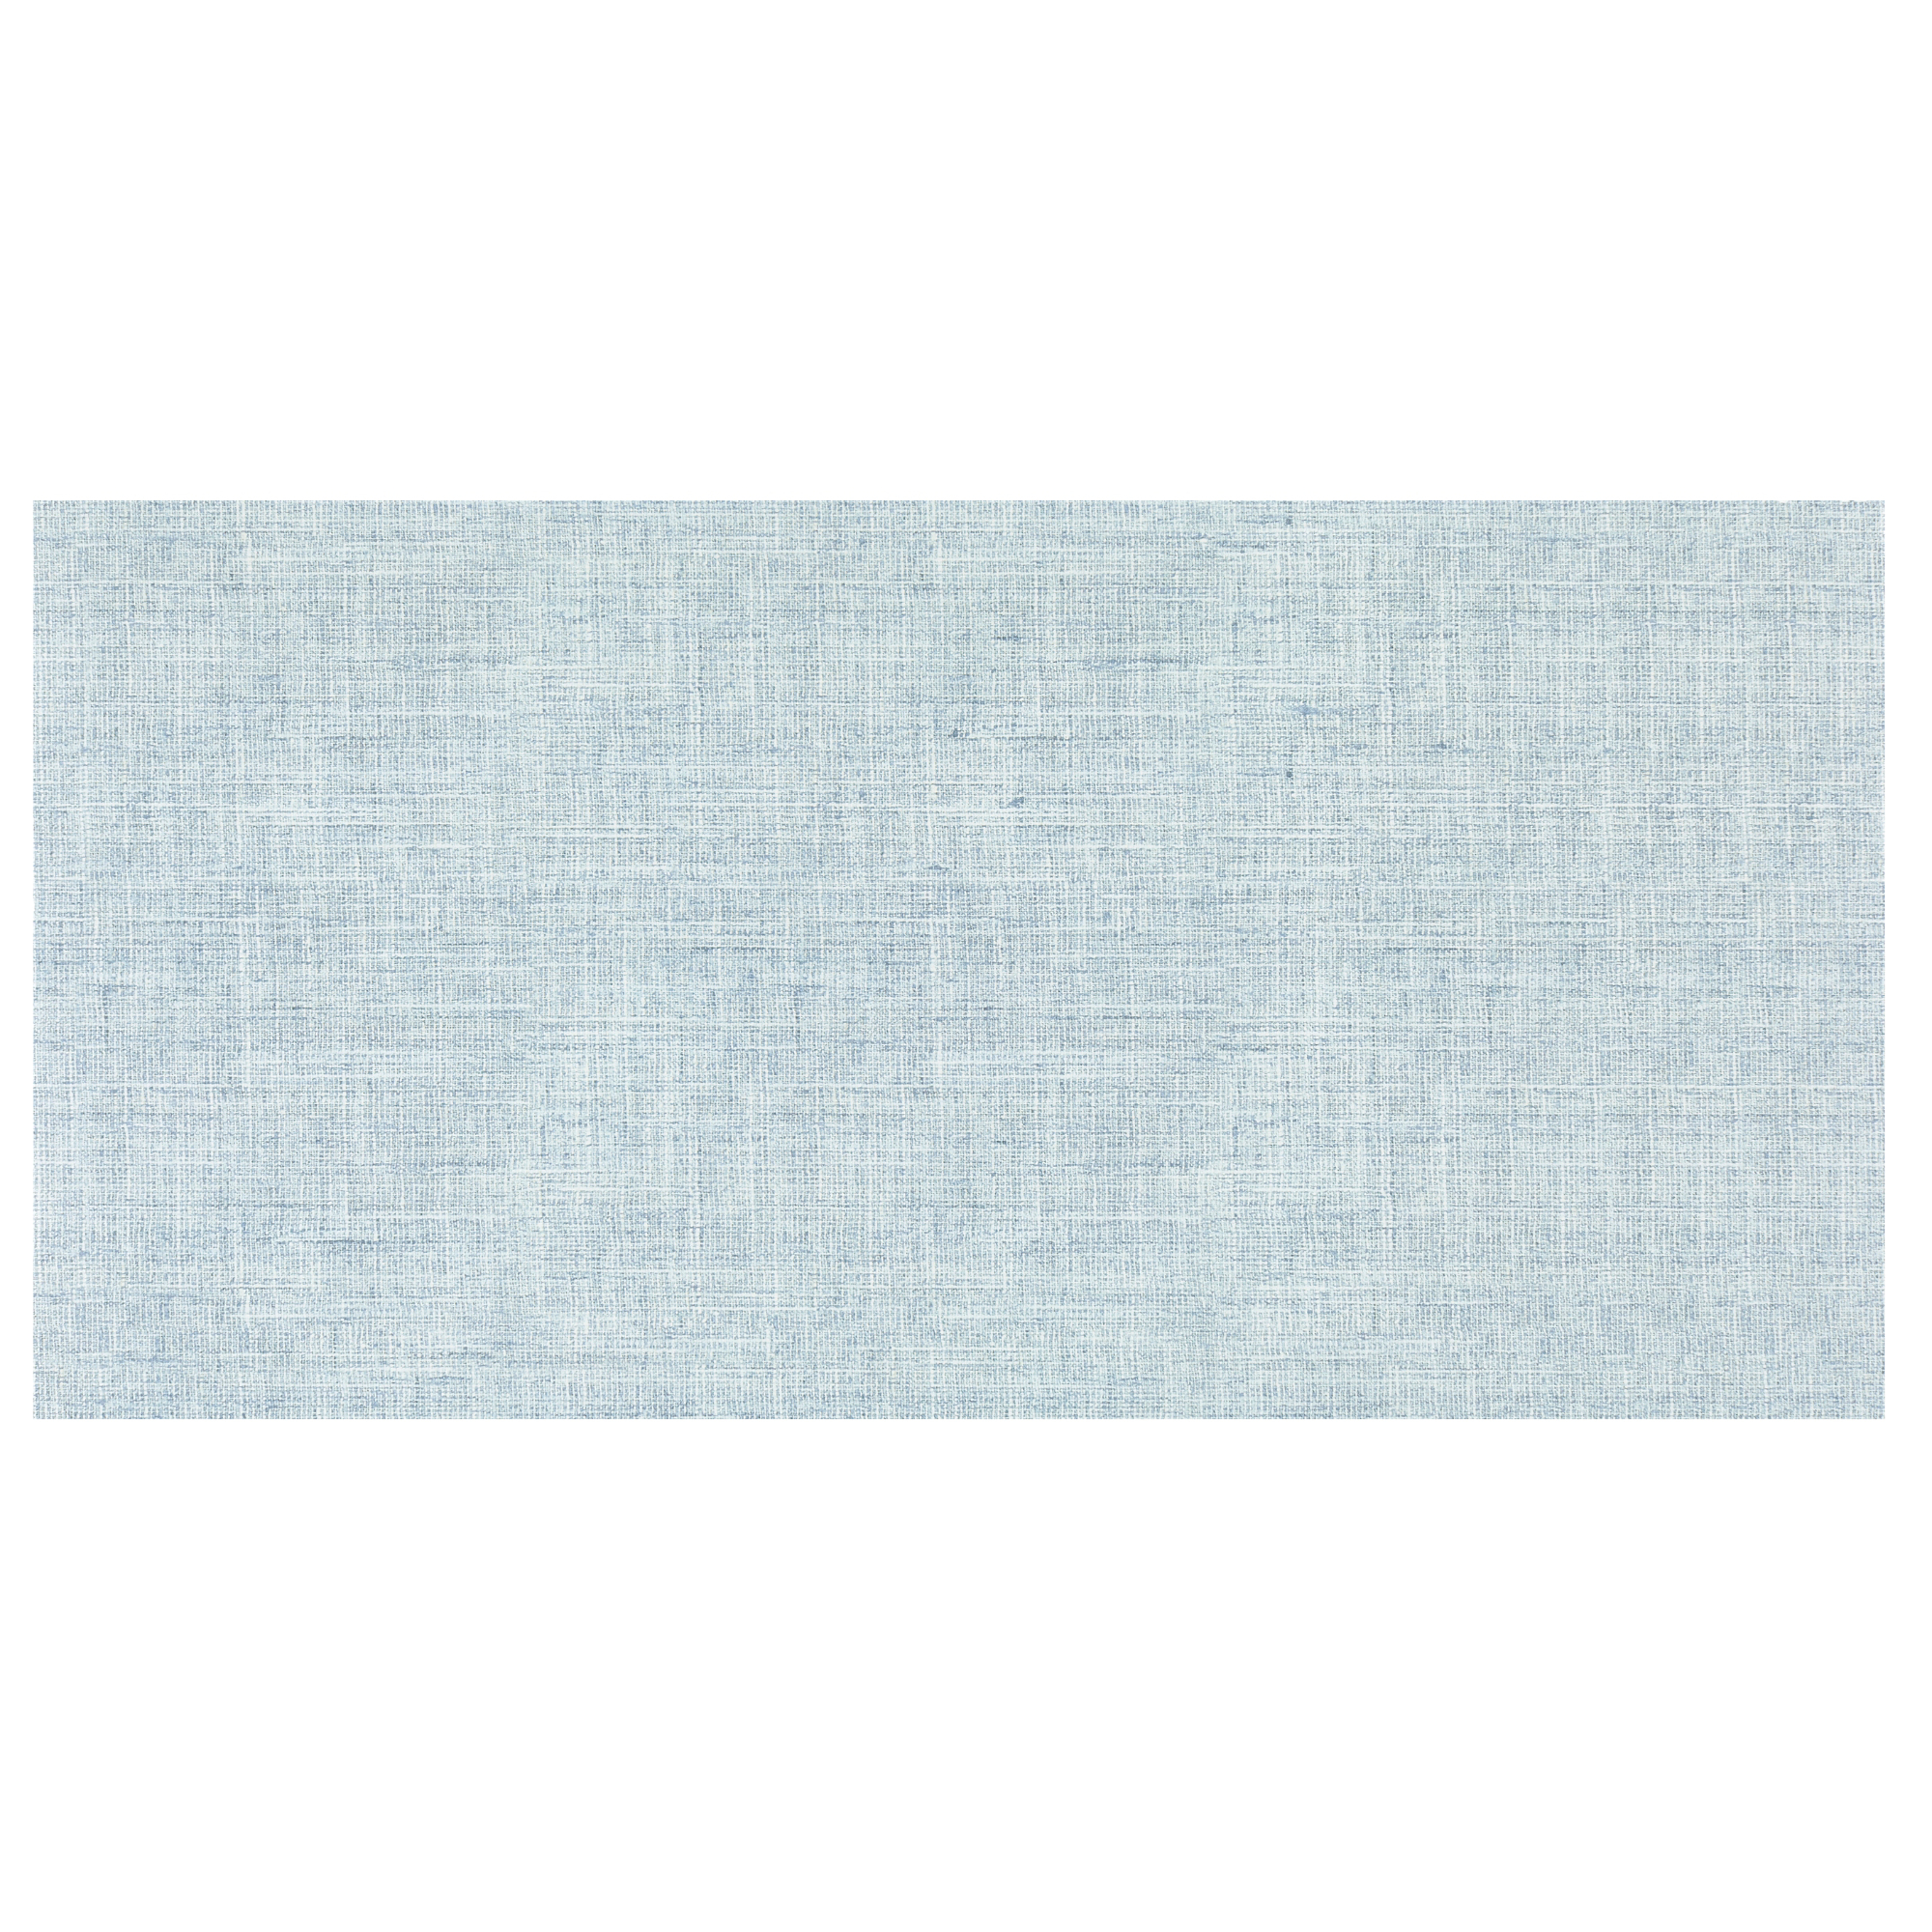 A. Selke Crosshatch Ice Blue 31x63cm